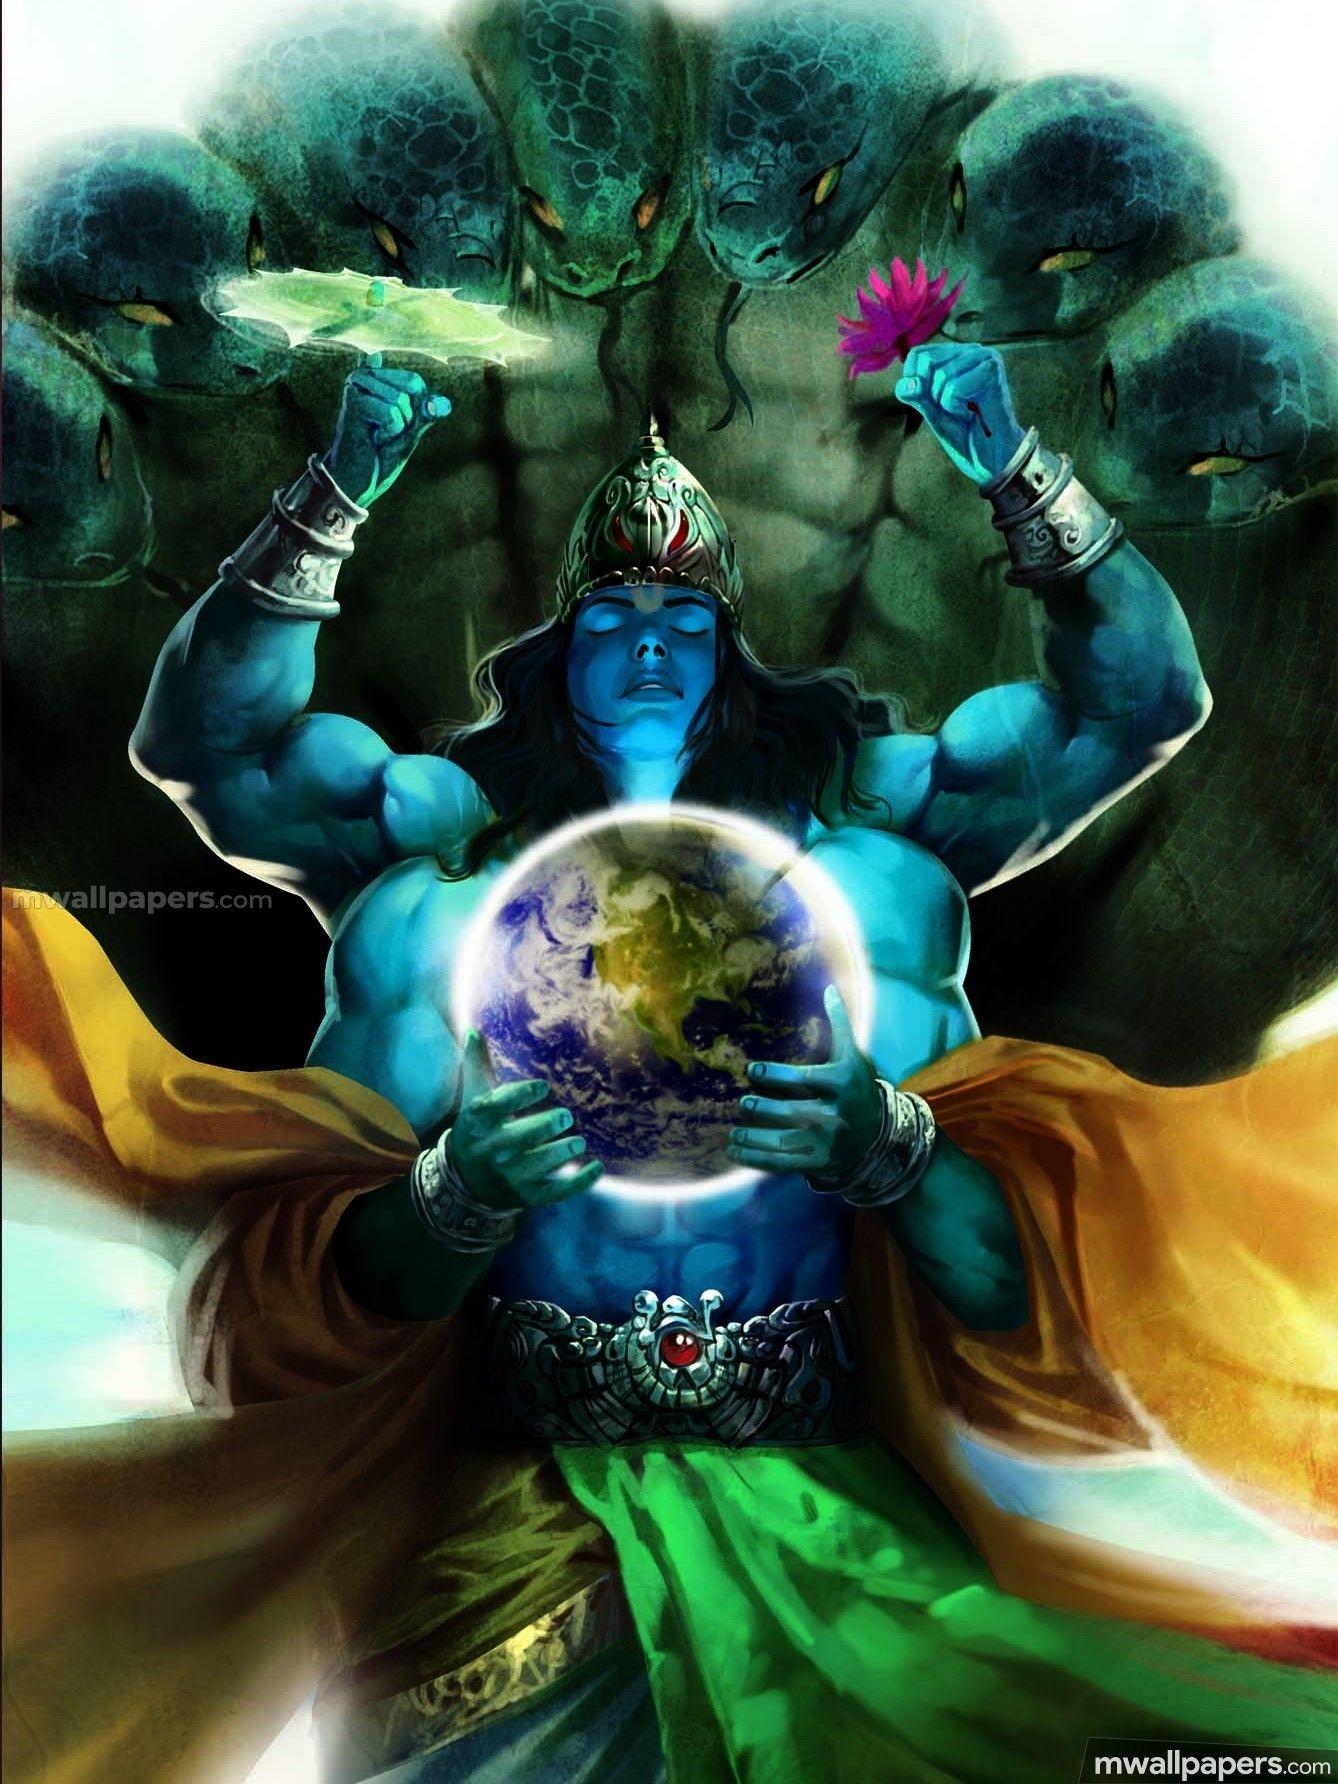 Soudamini Mujumdar Thakur on Twitter Angry Indian Gods Lord Krishna  httpstcojFfmmhtIW1 httpstcoGtCQJtHOZ0  Twitter